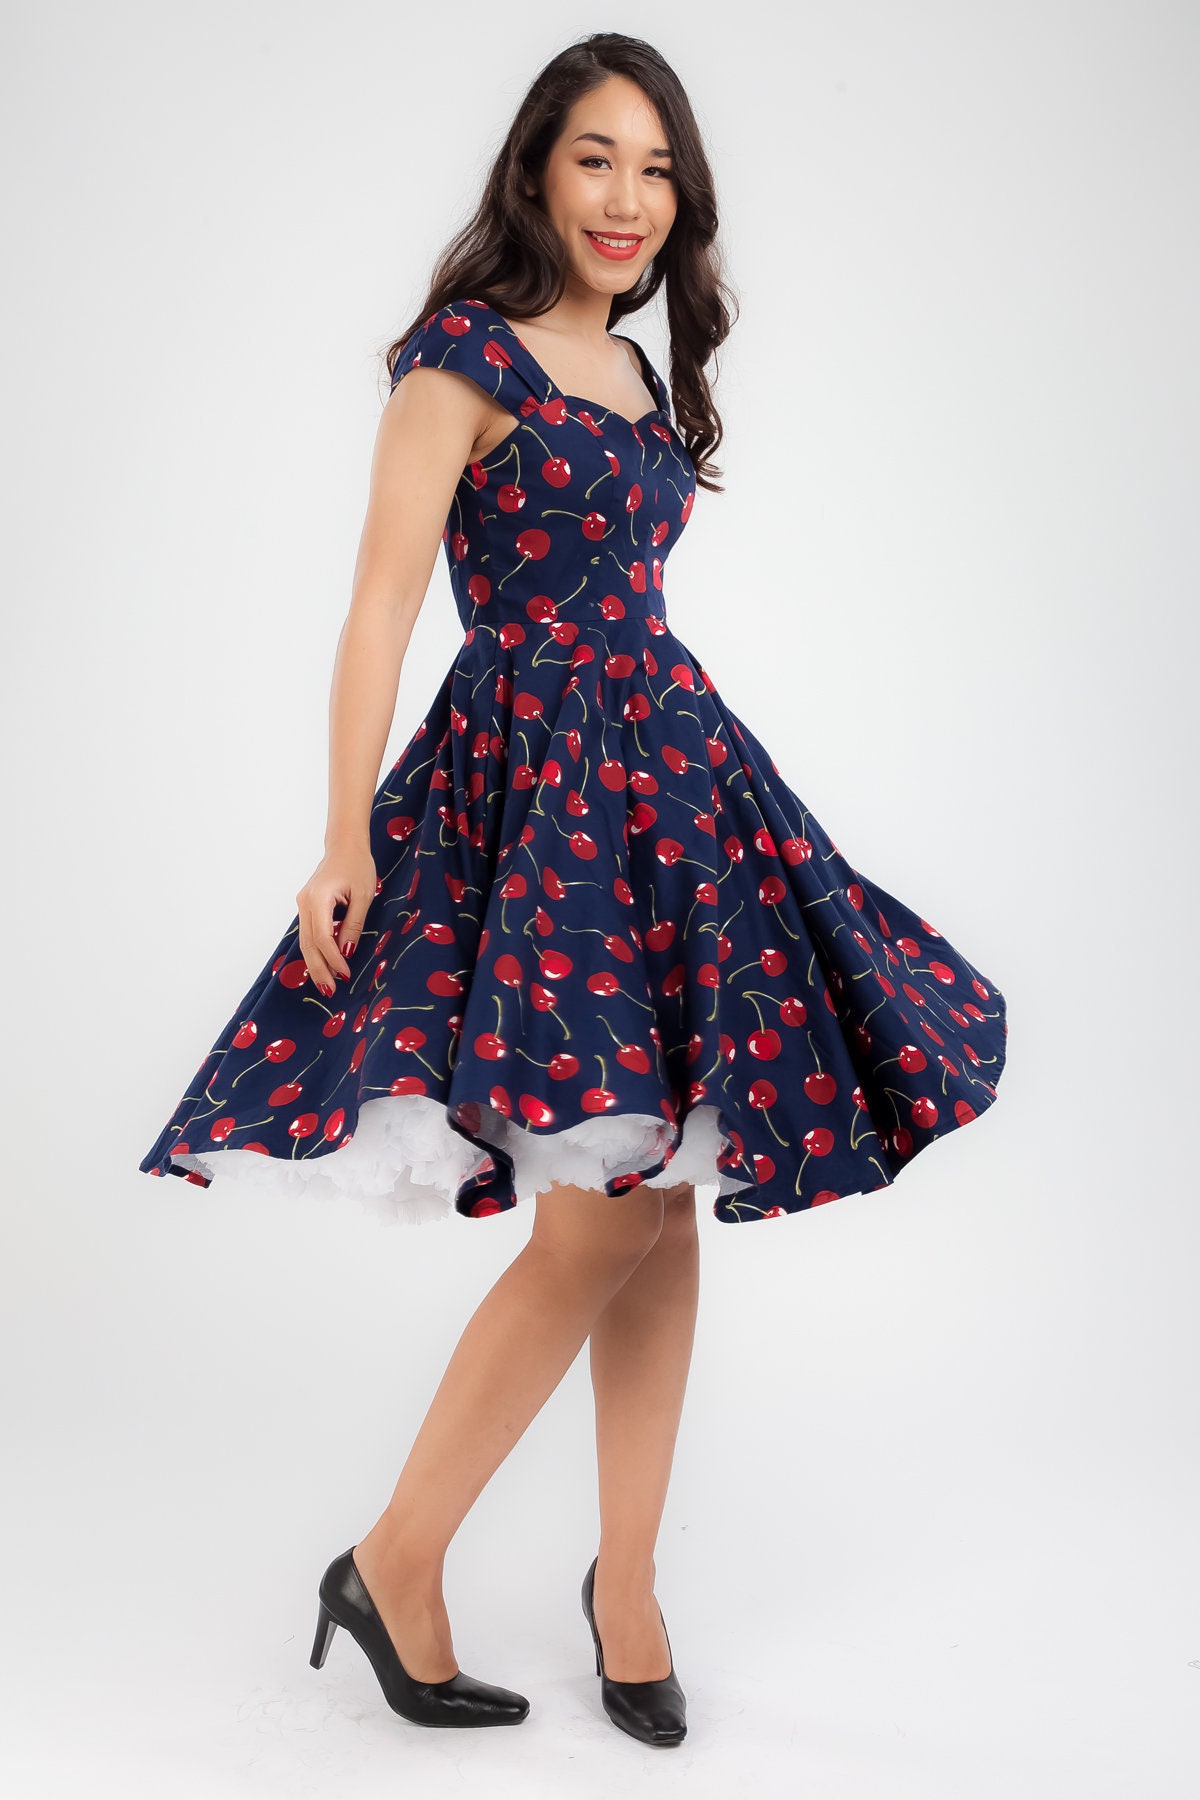 Navy Cherry Dress Cherries Dress 50S Dress Rockabilly Dress - Etsy